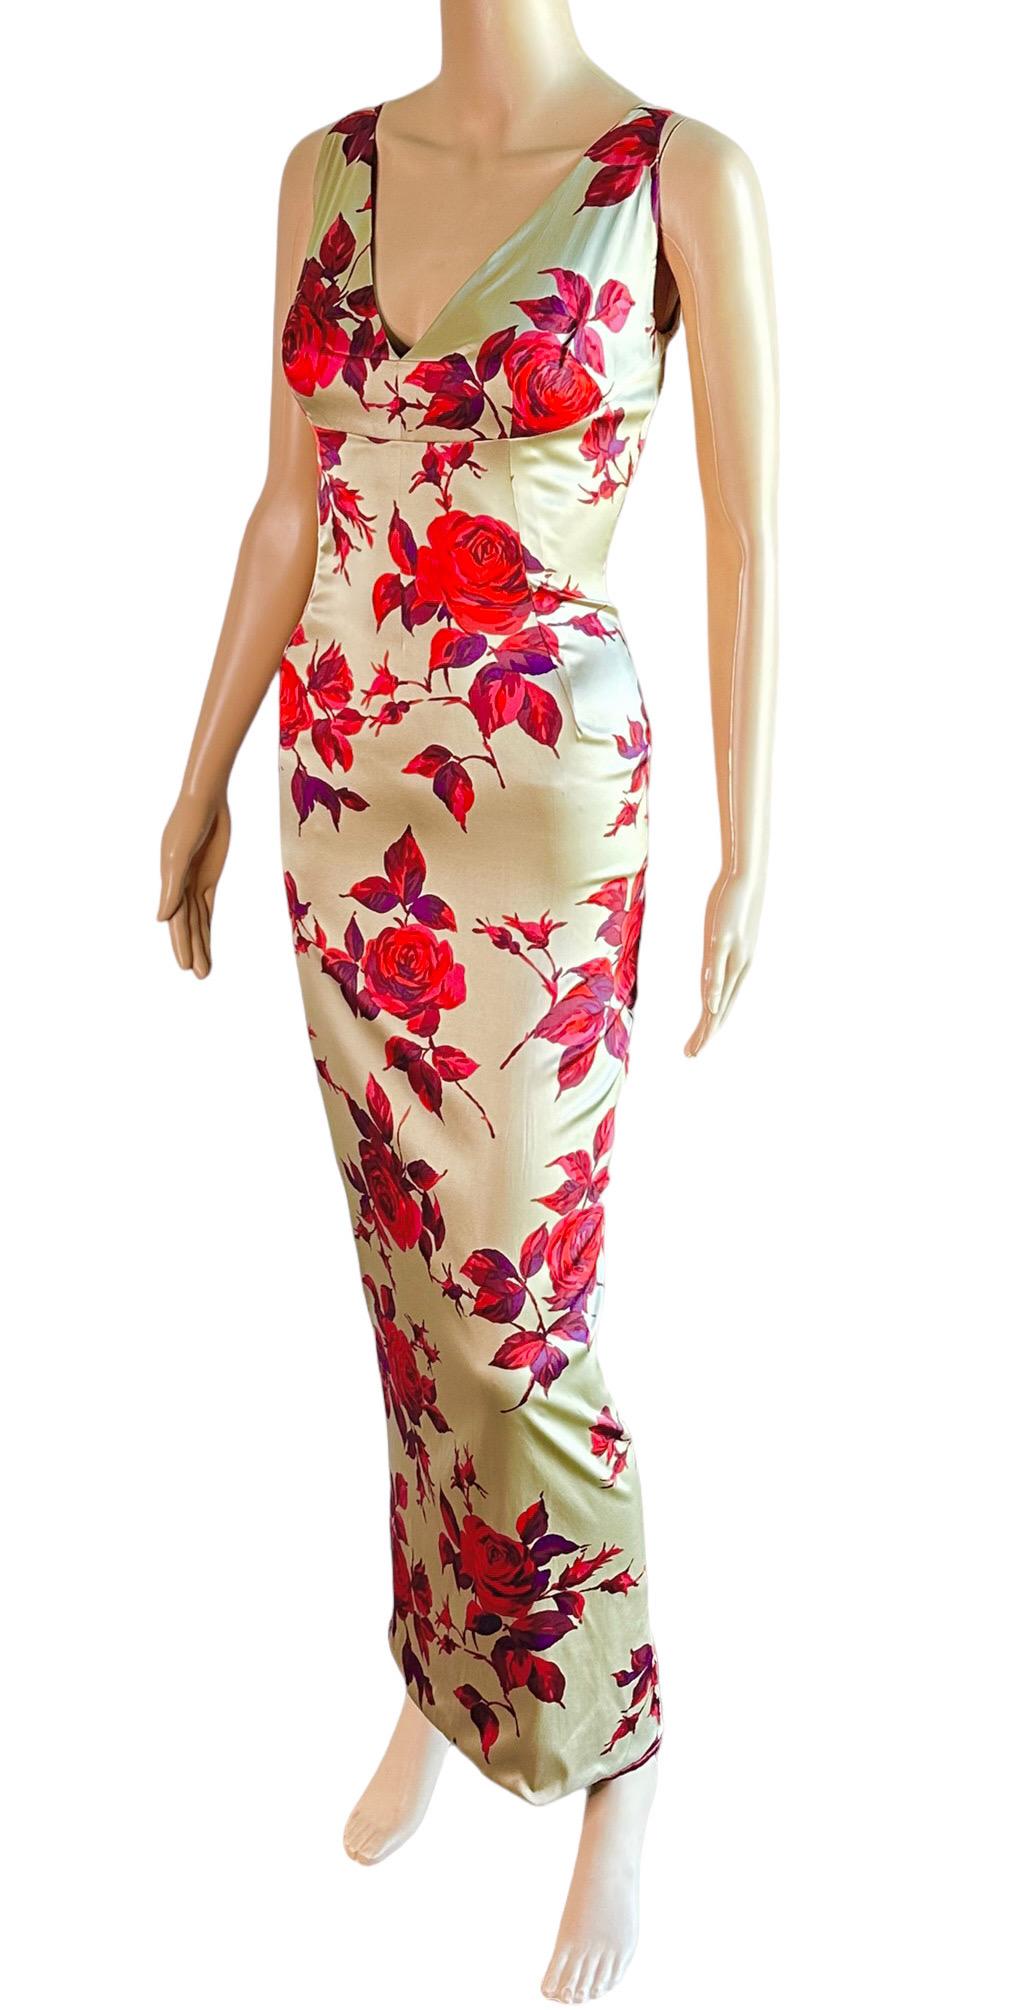 Dolce & Gabbana 1990's Vintage Unworn Silk Floral Rose Print Evening Dress Gown For Sale 3